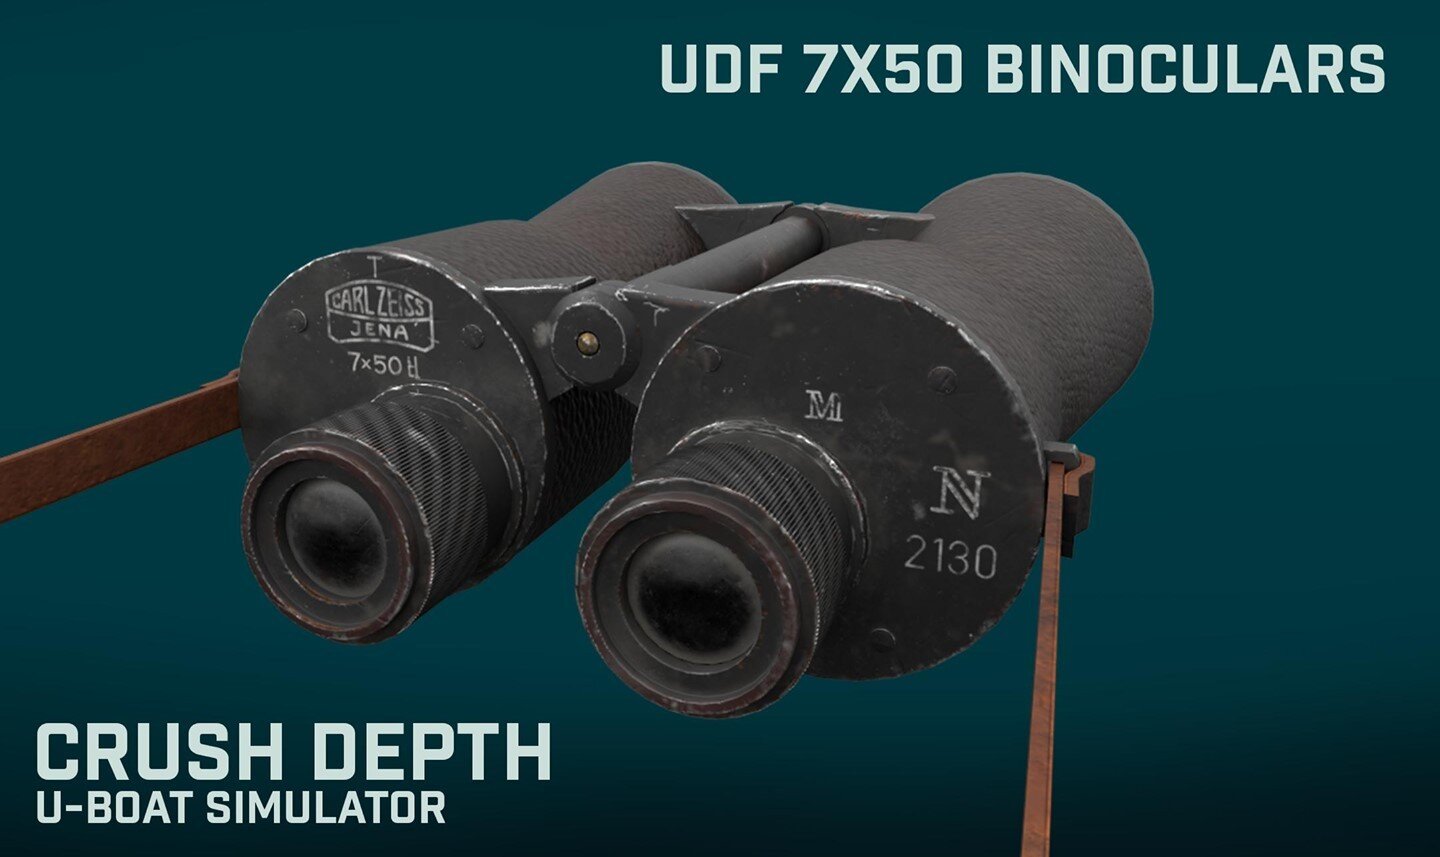 UDF 7x50 binoculars